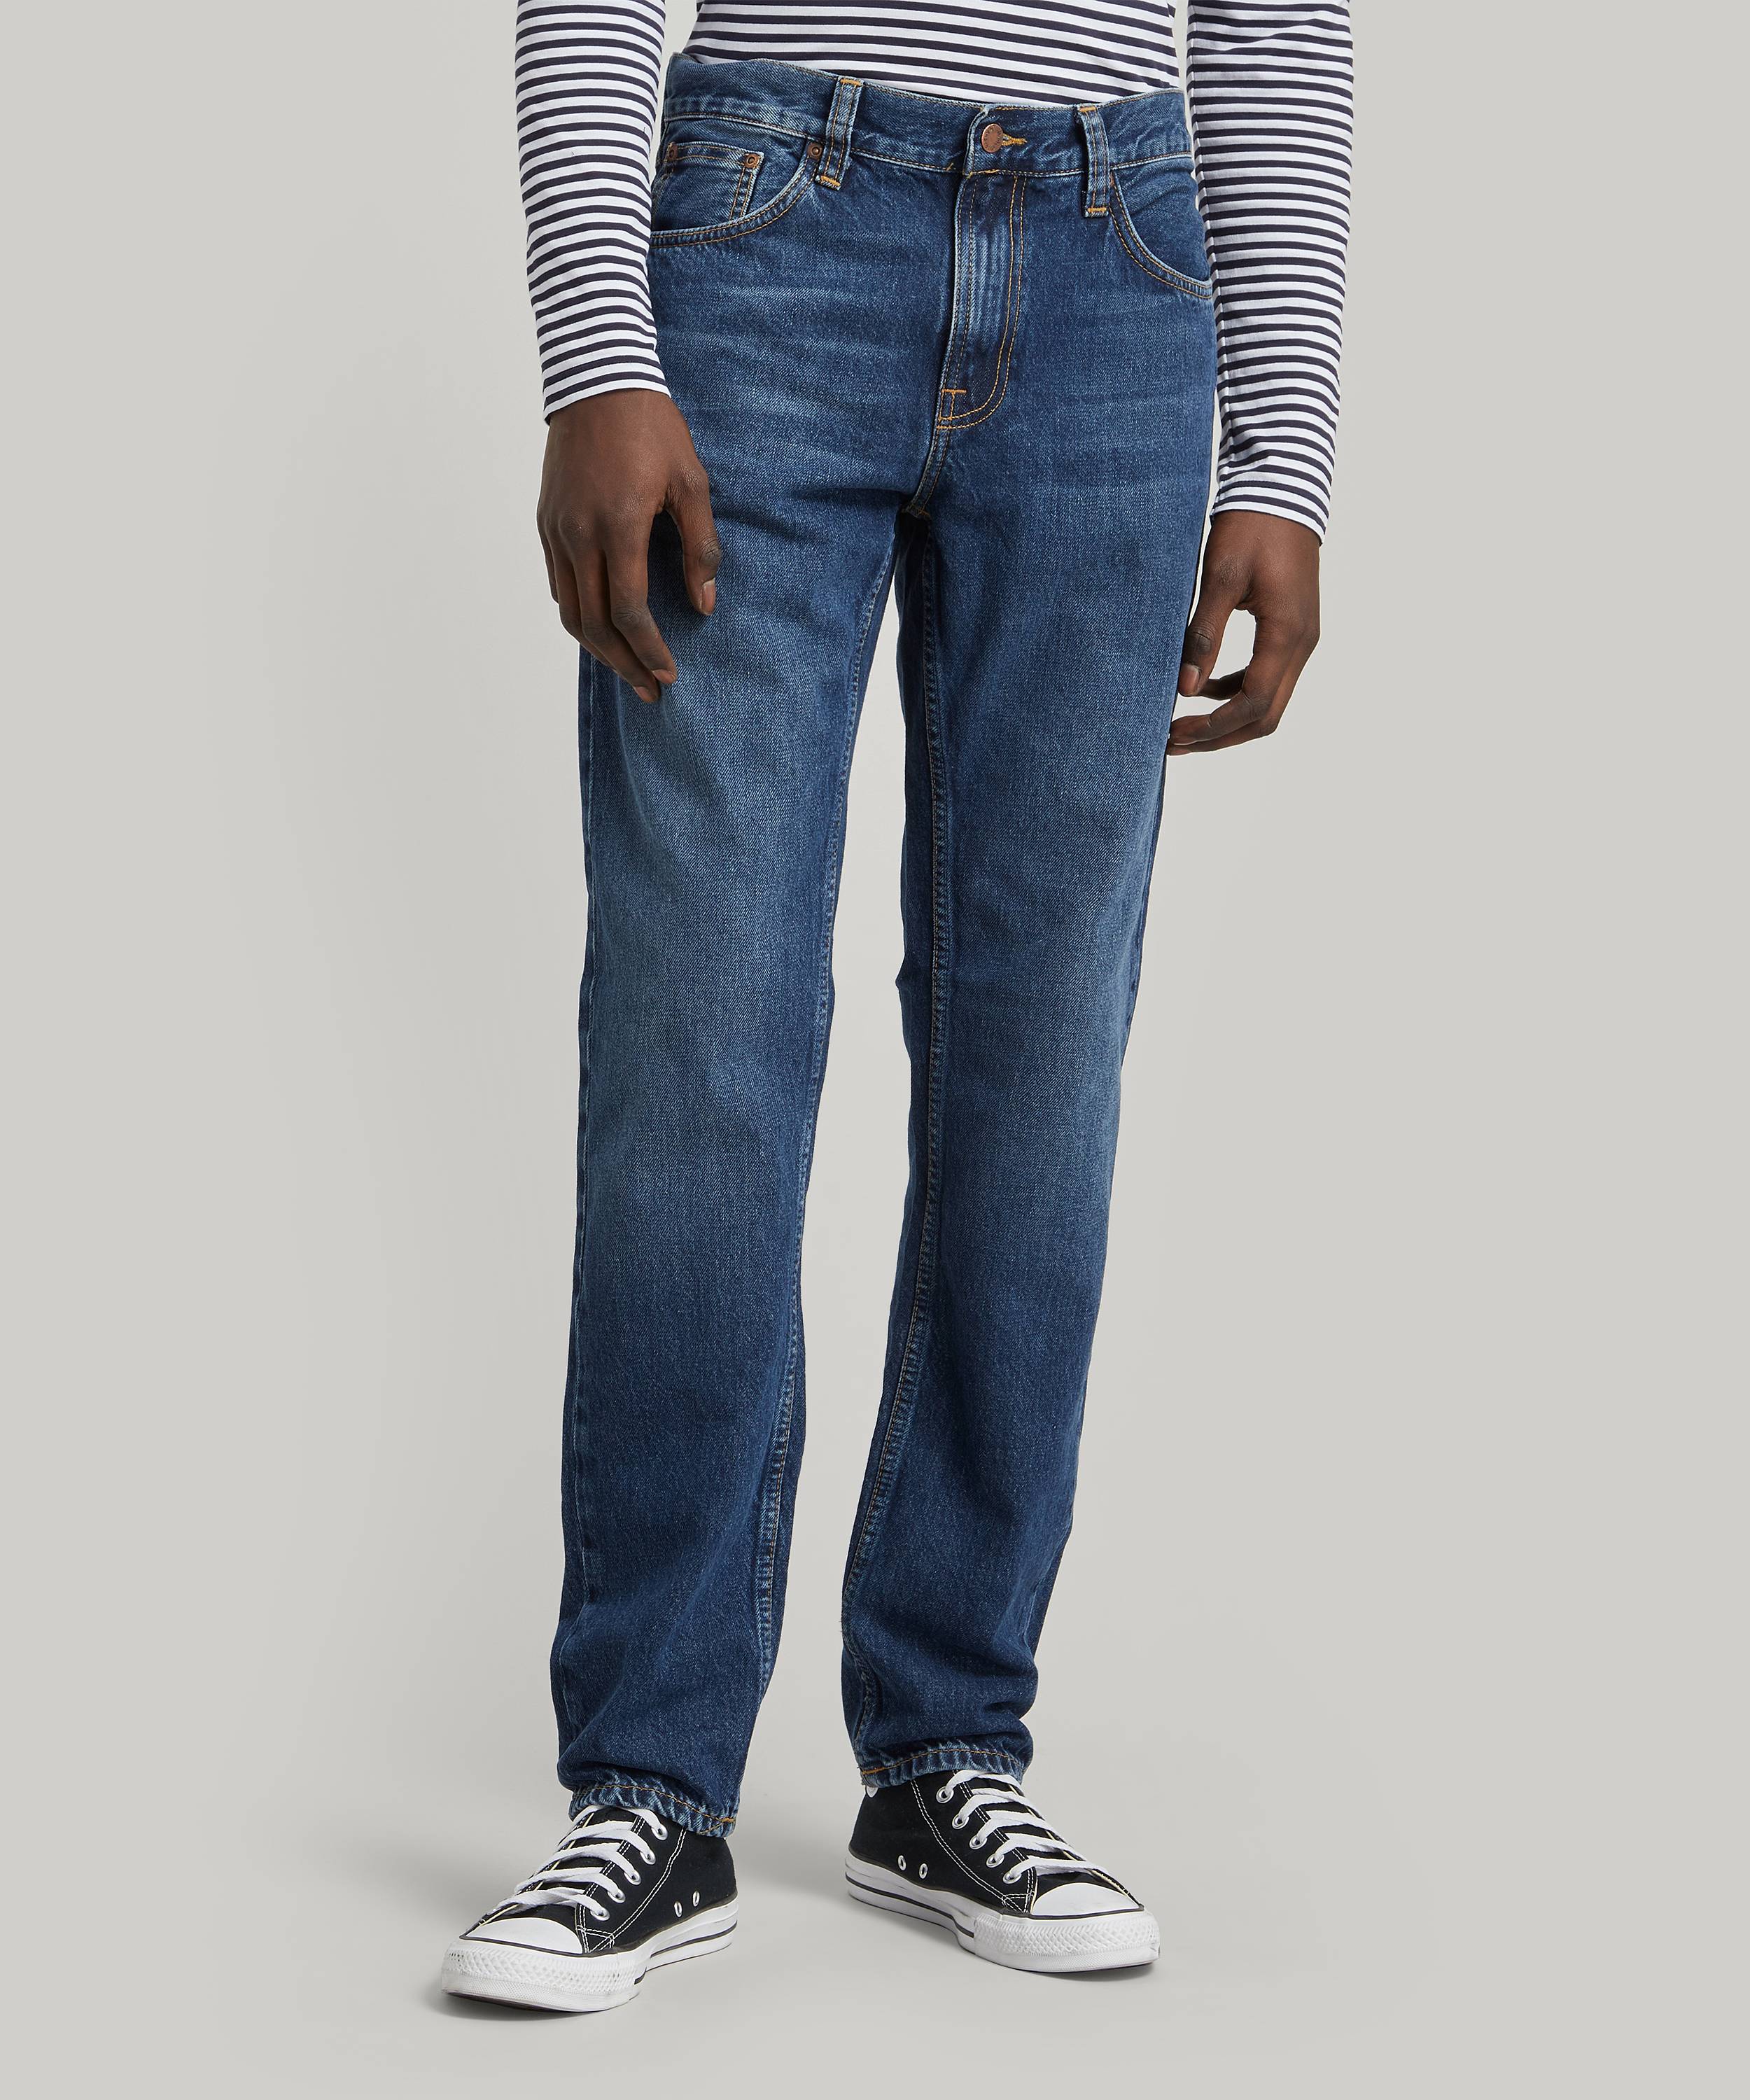 Nudie Jeans Gritty Jackson Blue Slate Jeans | Liberty